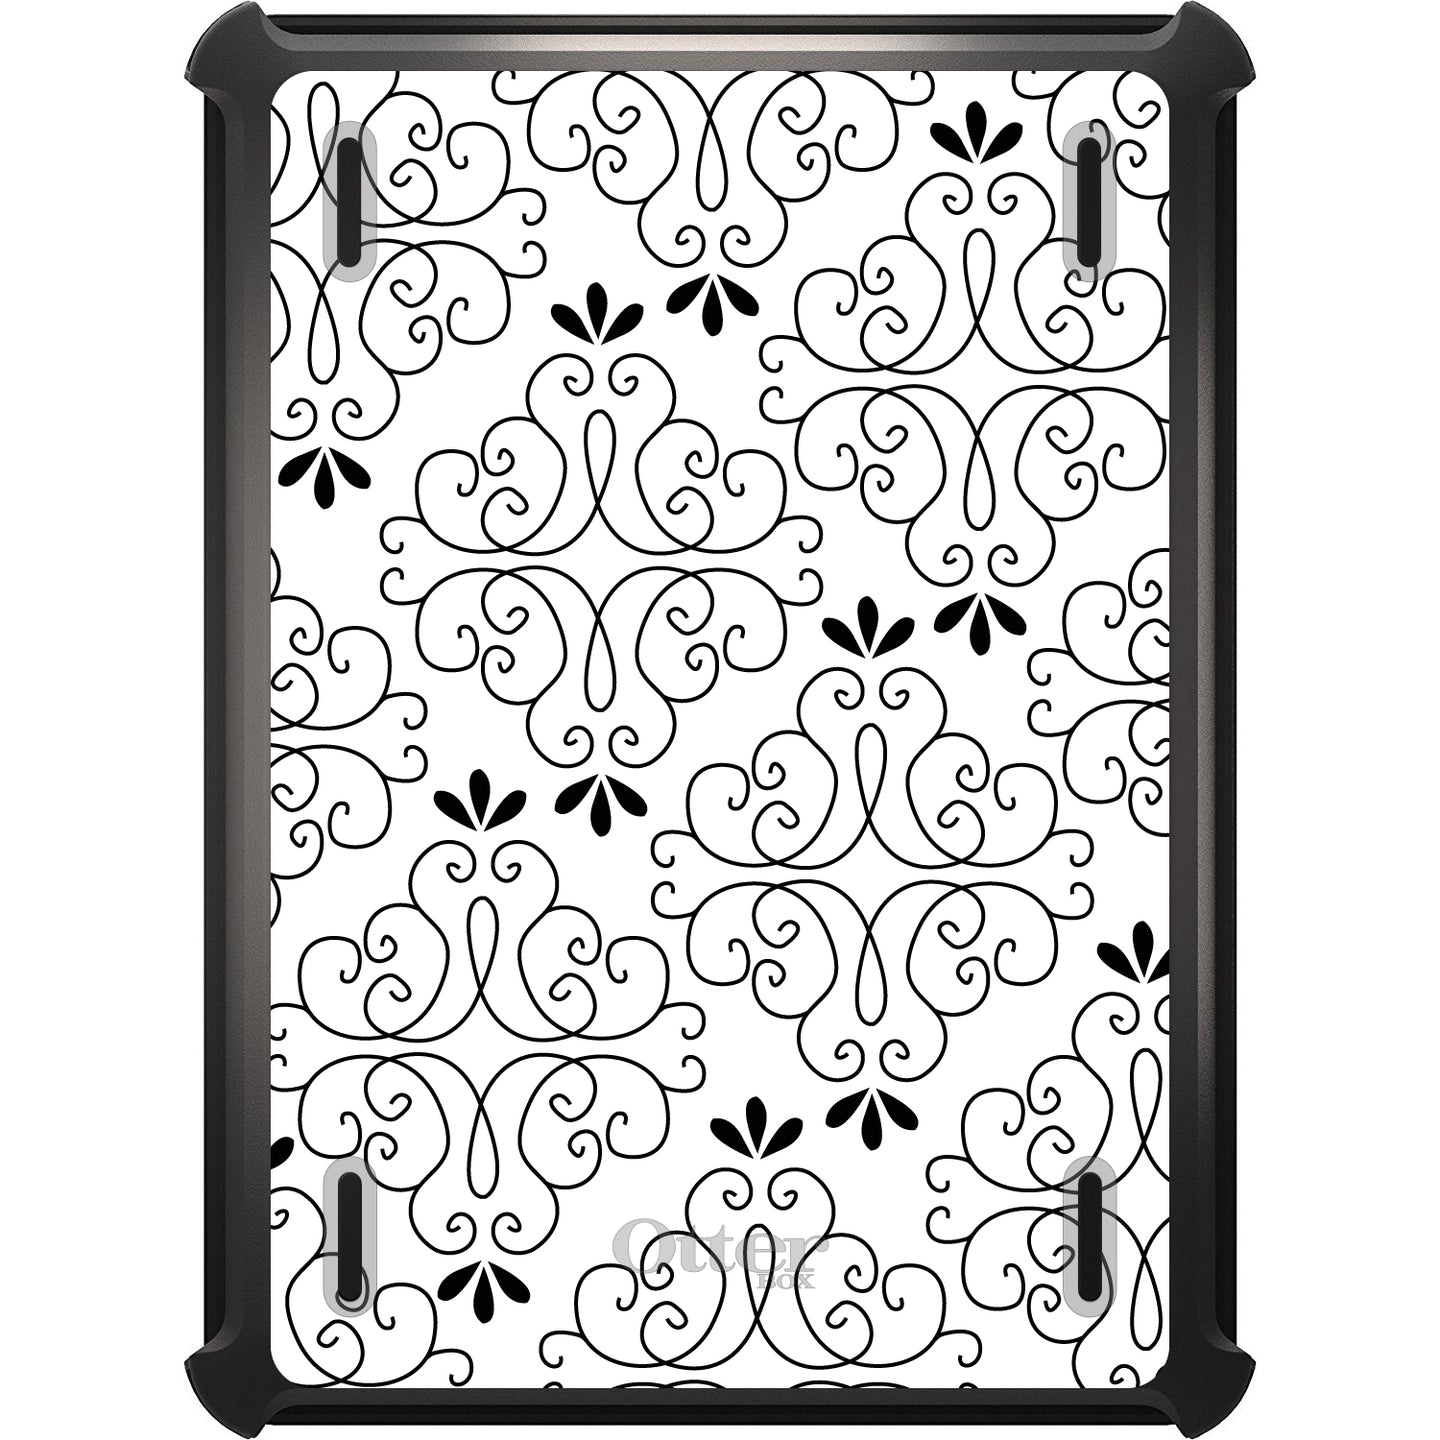 DistinctInk™ OtterBox Defender Series Case for Apple iPad / iPad Pro / iPad Air / iPad Mini - Black White Floral Pattern